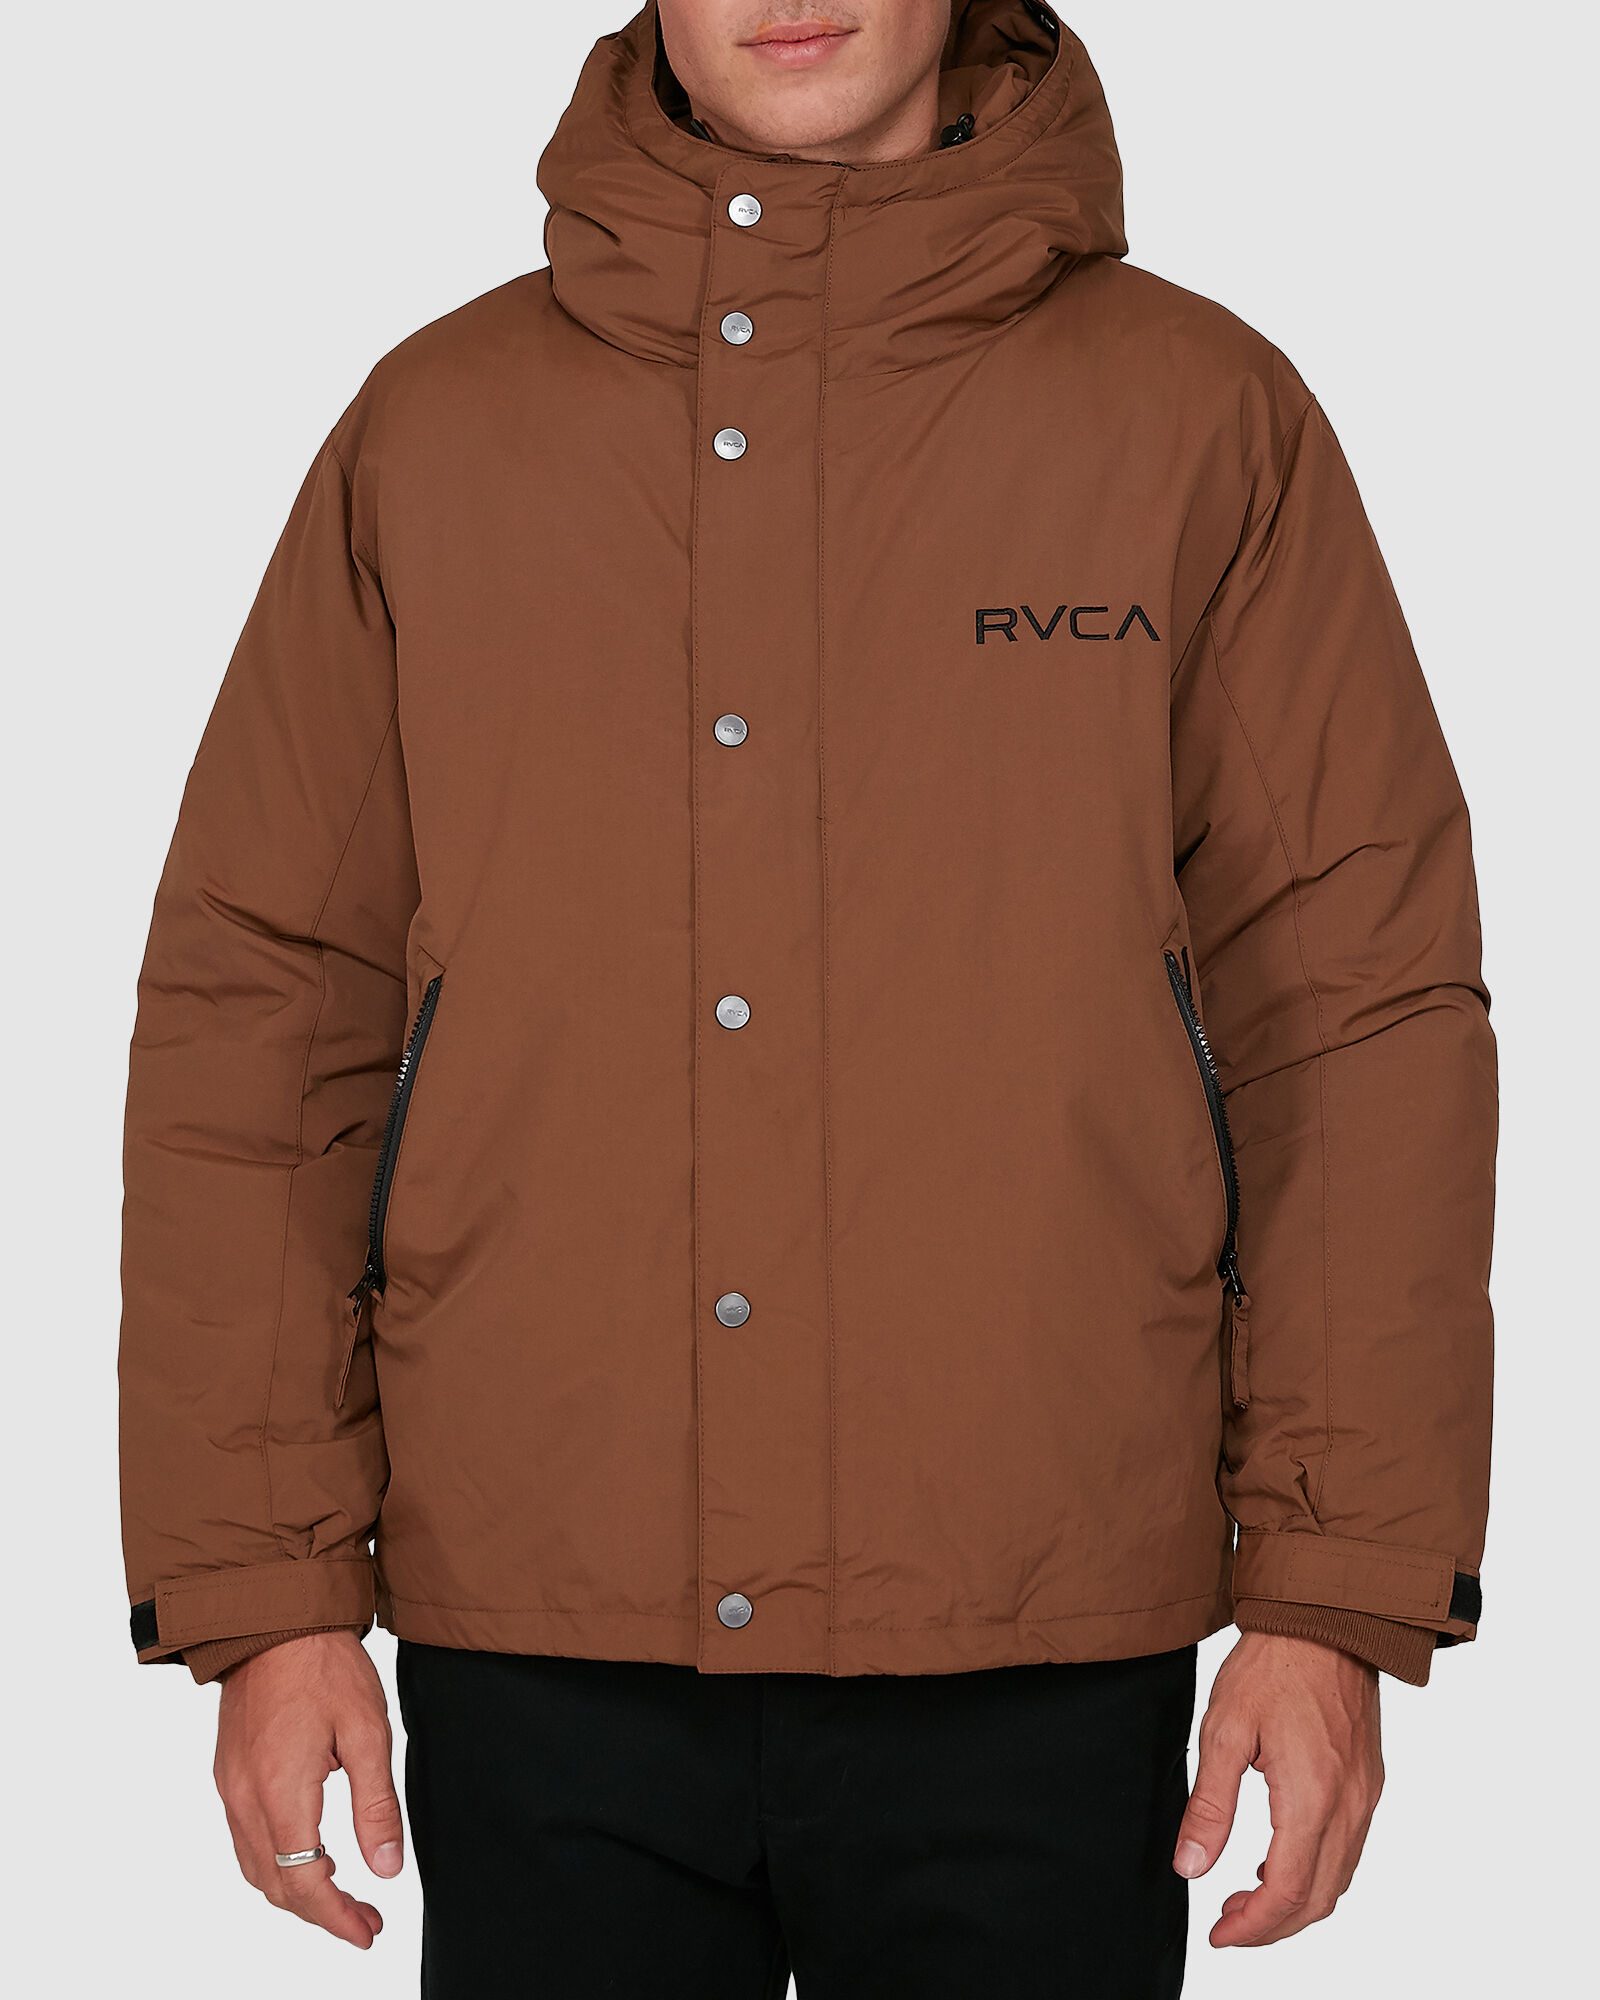 rvca snowboard jackets